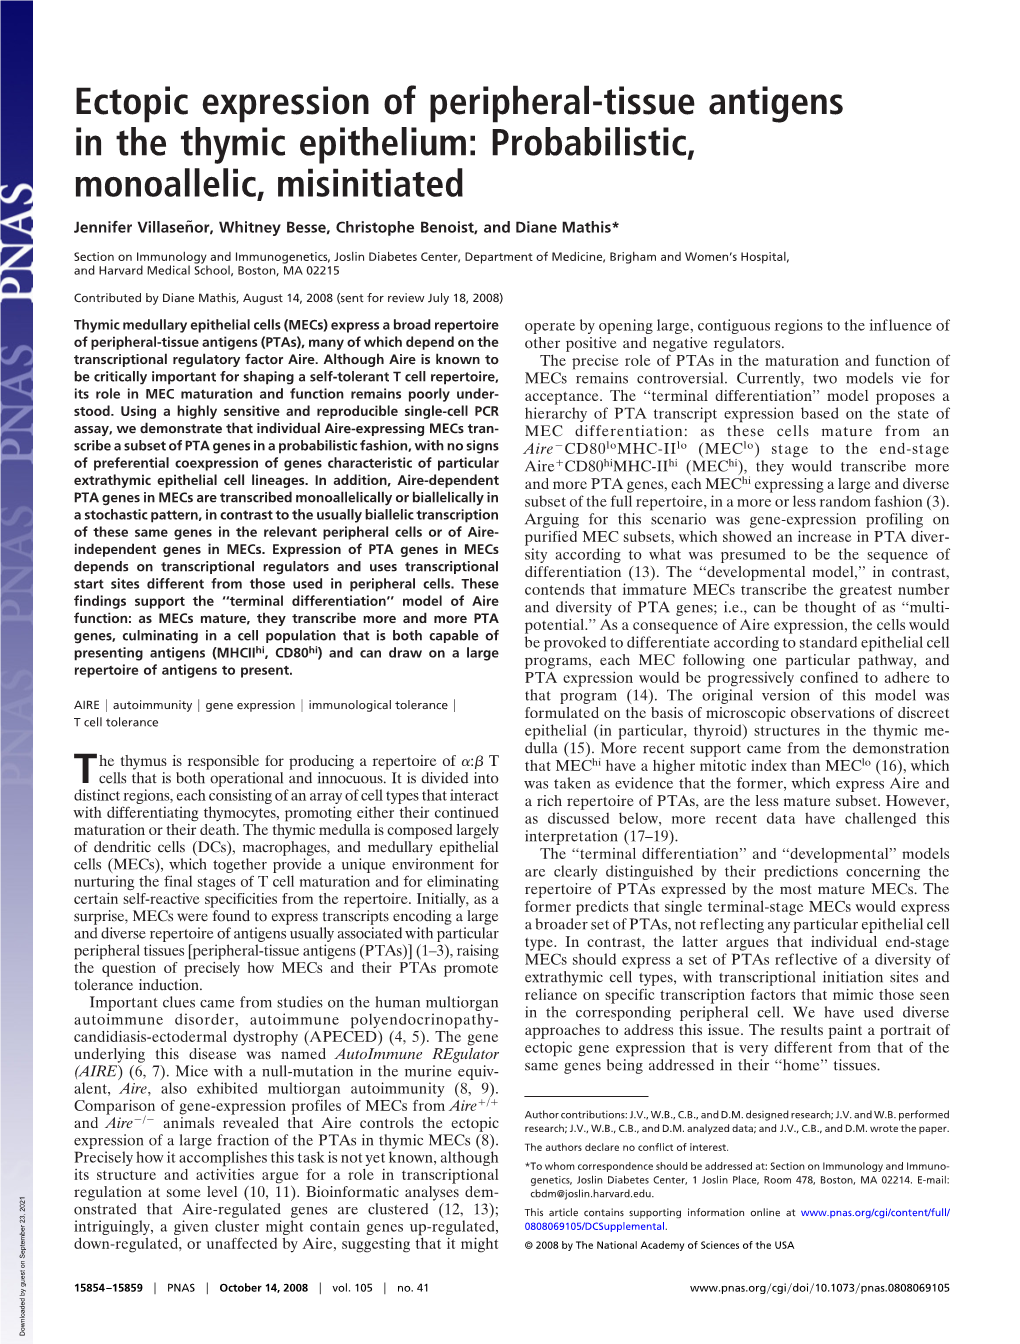 Ectopic Expression of Peripheral-Tissue Antigens in the Thymic Epithelium: Probabilistic, Monoallelic, Misinitiated